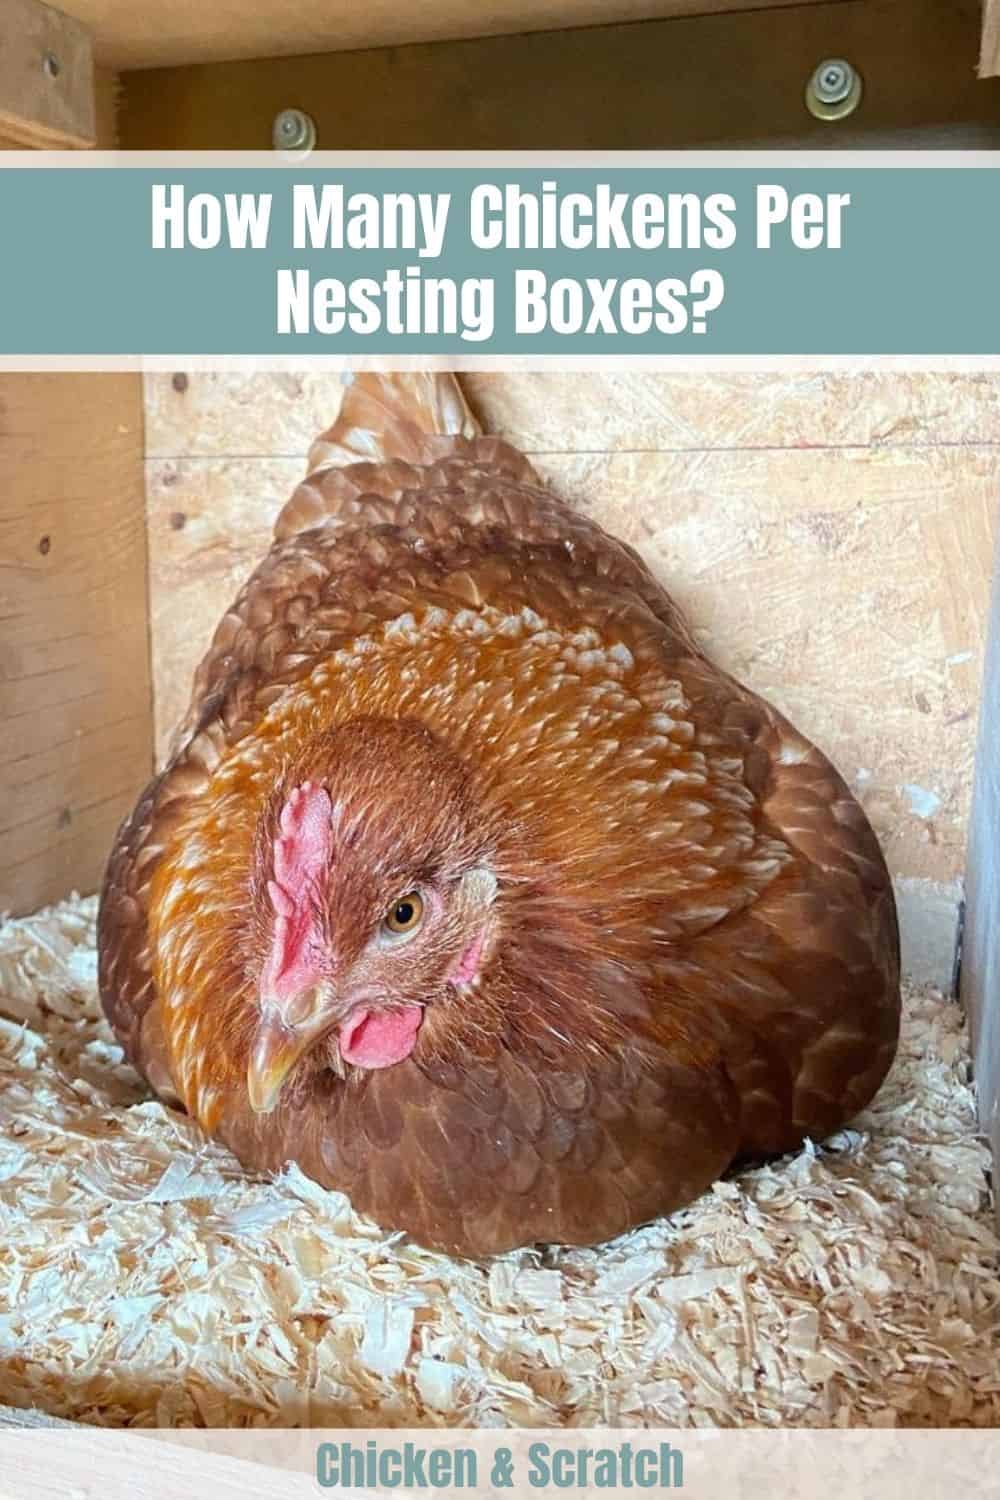 nesting boxes per chicken